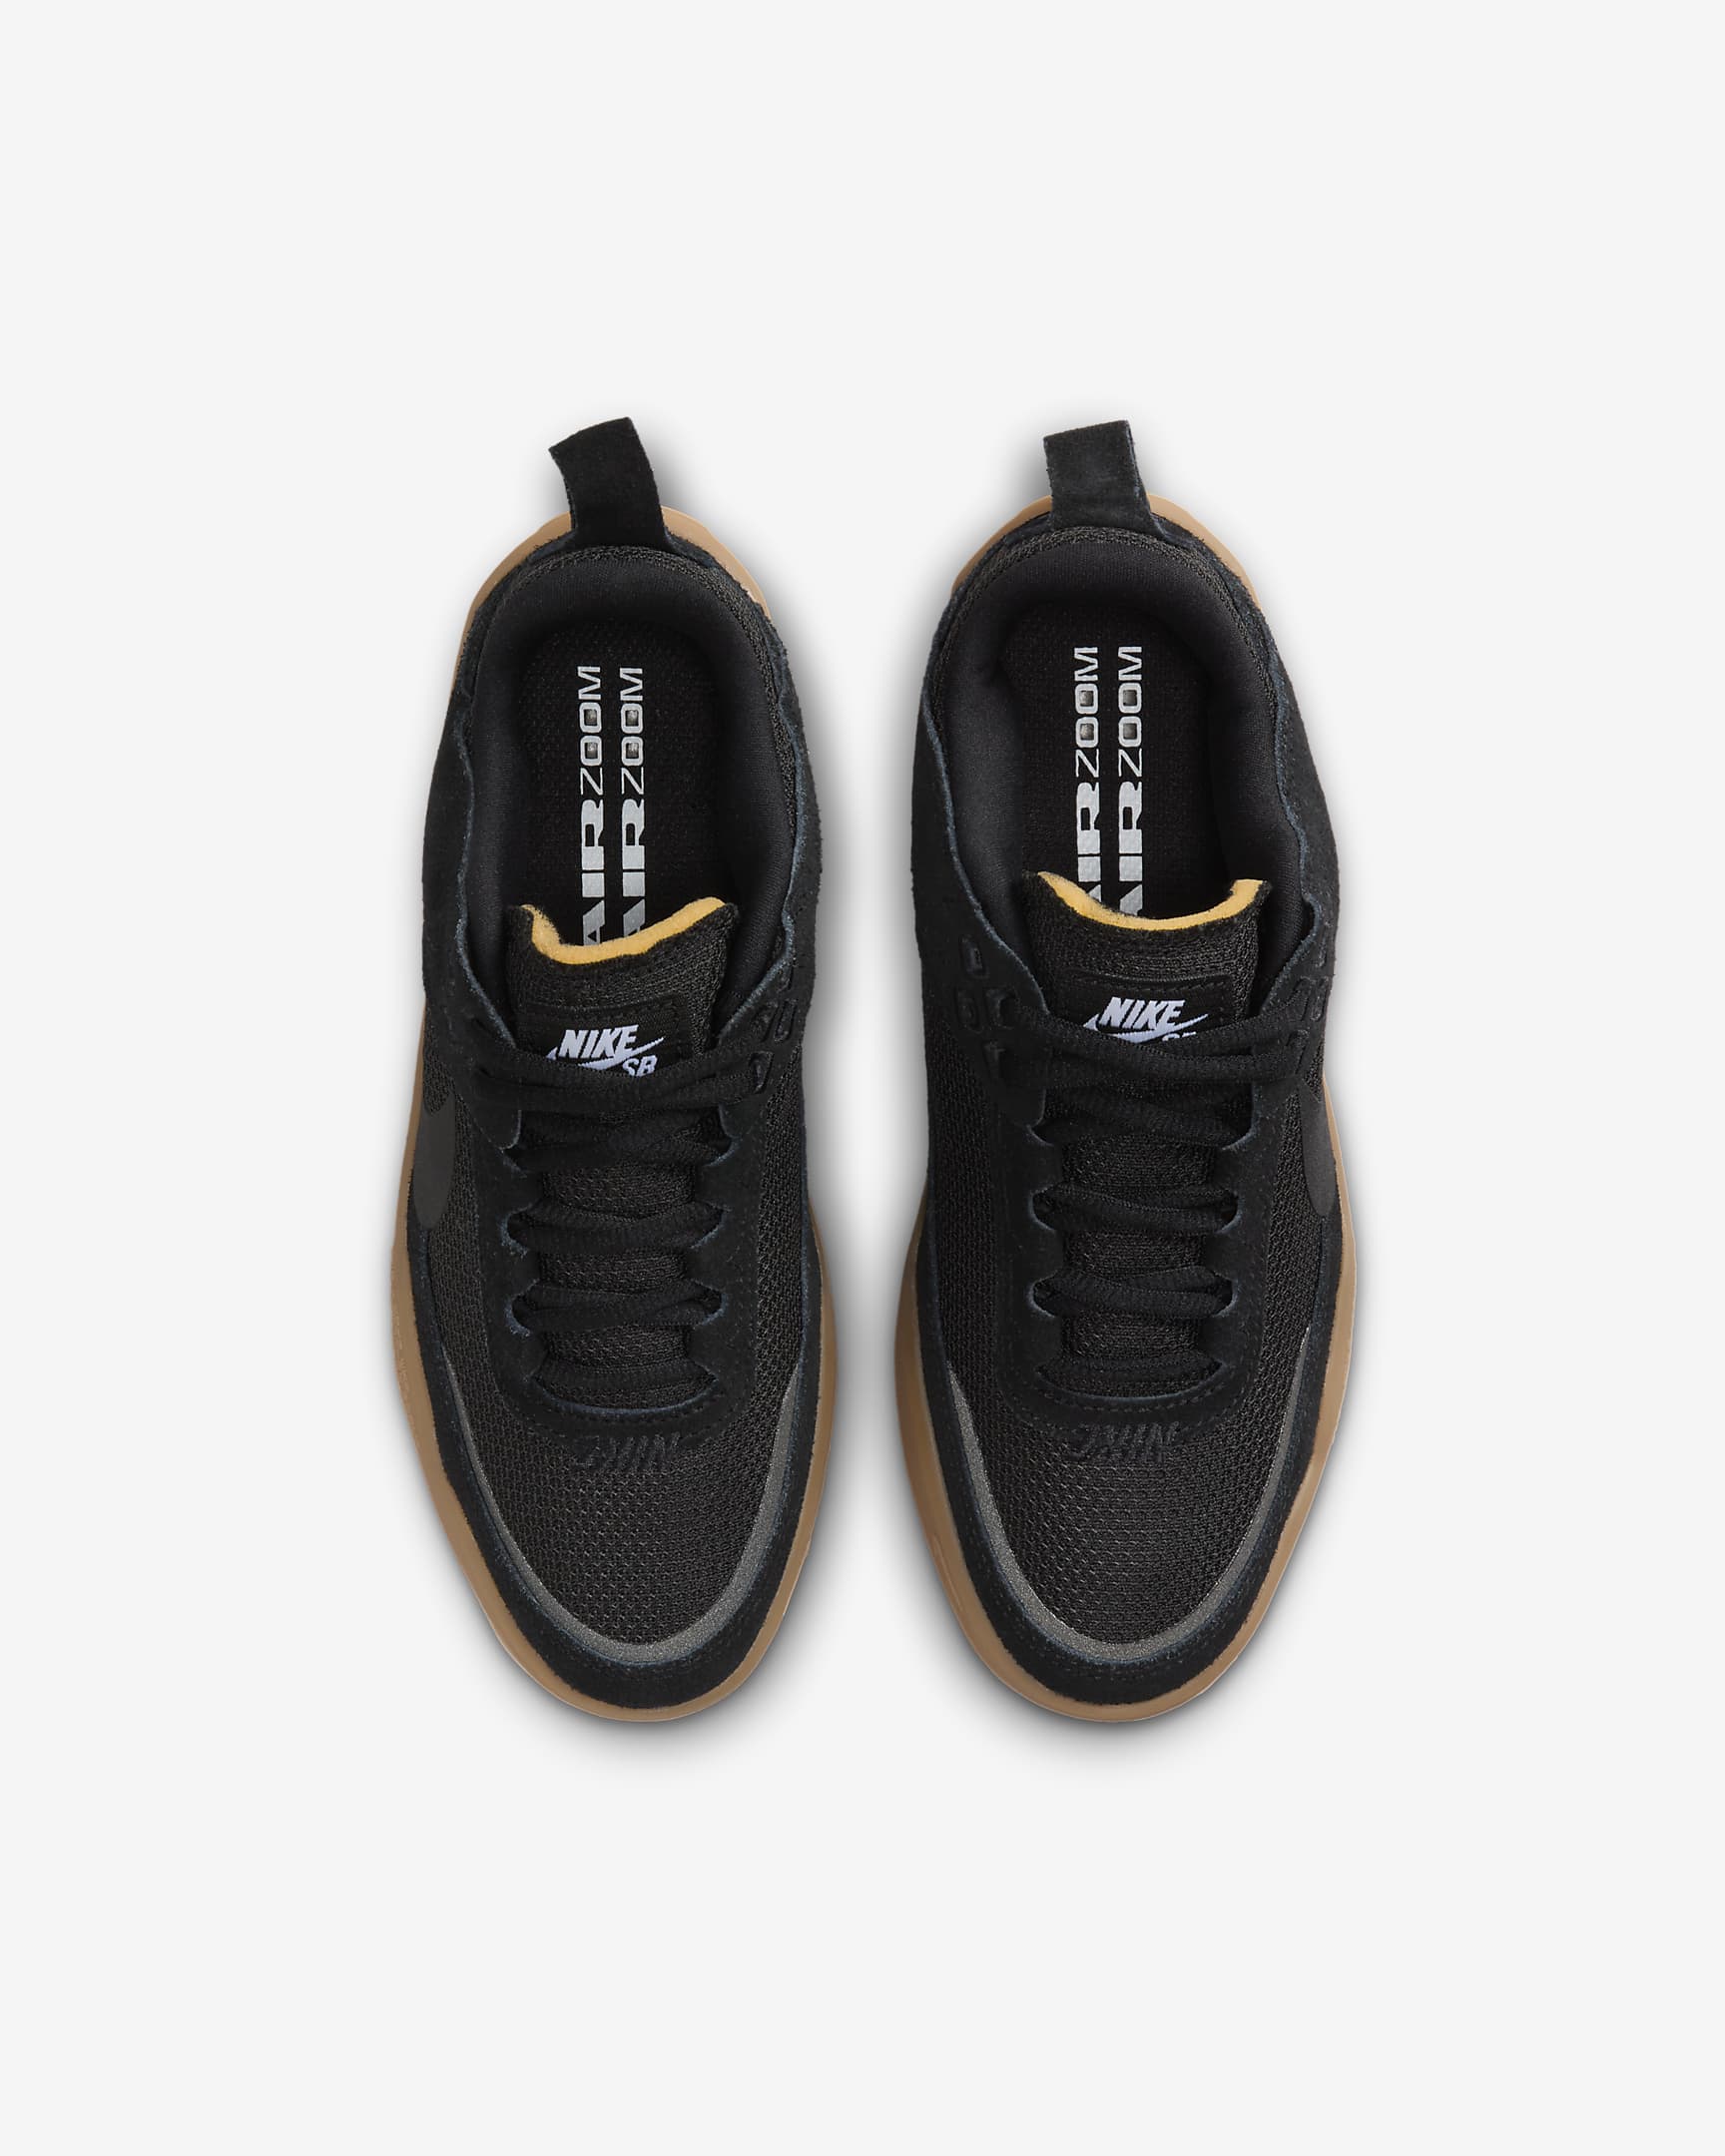 Chaussure de skate Nike SB Day One pour ado - Noir/Gum Light Brown/Blanc/Noir